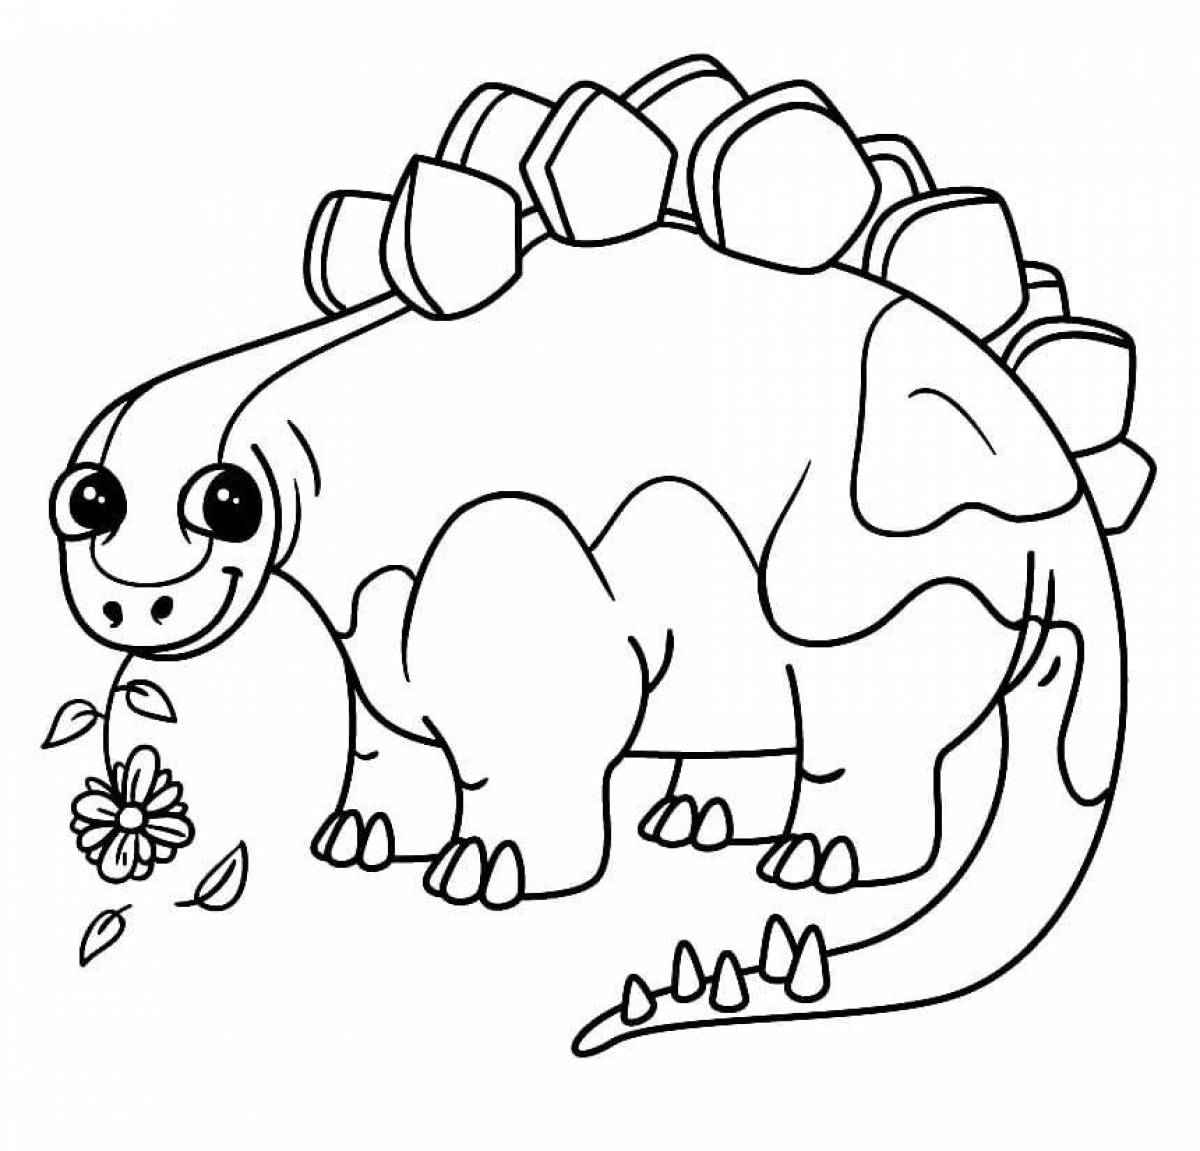 Coloring page joyful stegosaurus